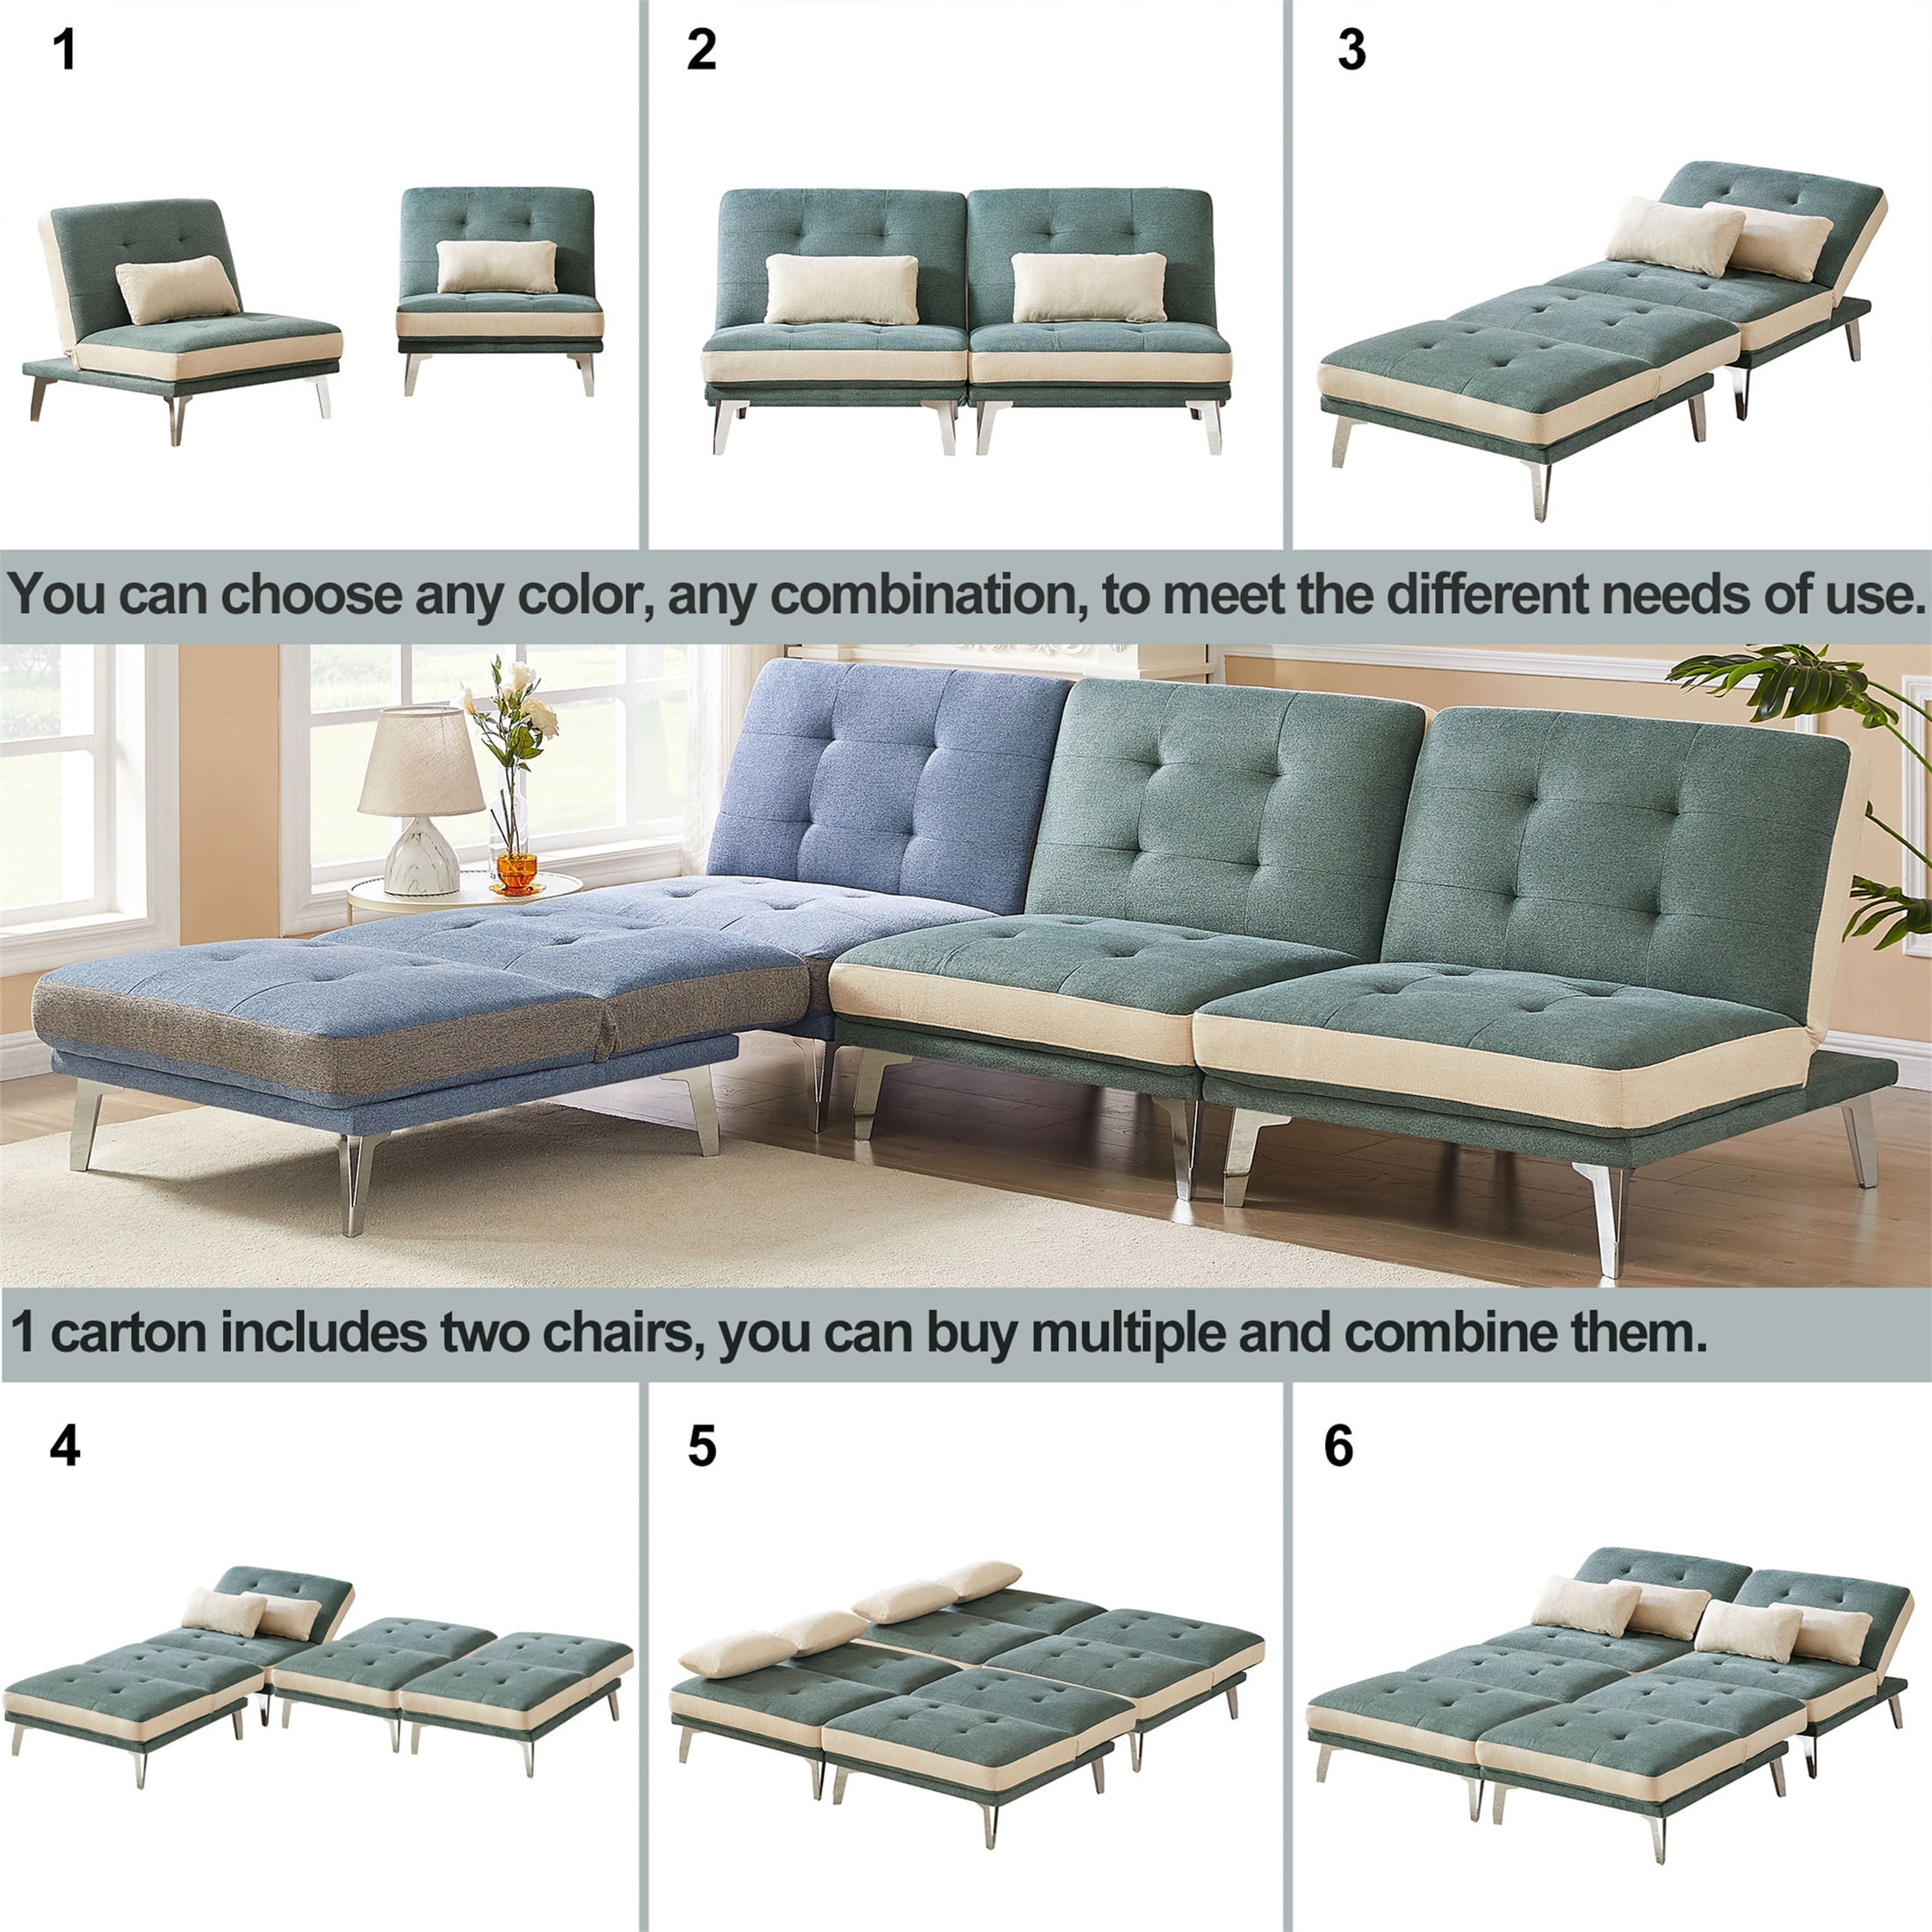 Aukfa Modular Sectional Sofa- Convertible Sleeper Sofa Queen Bed- Living  Room Furniture Set- 110